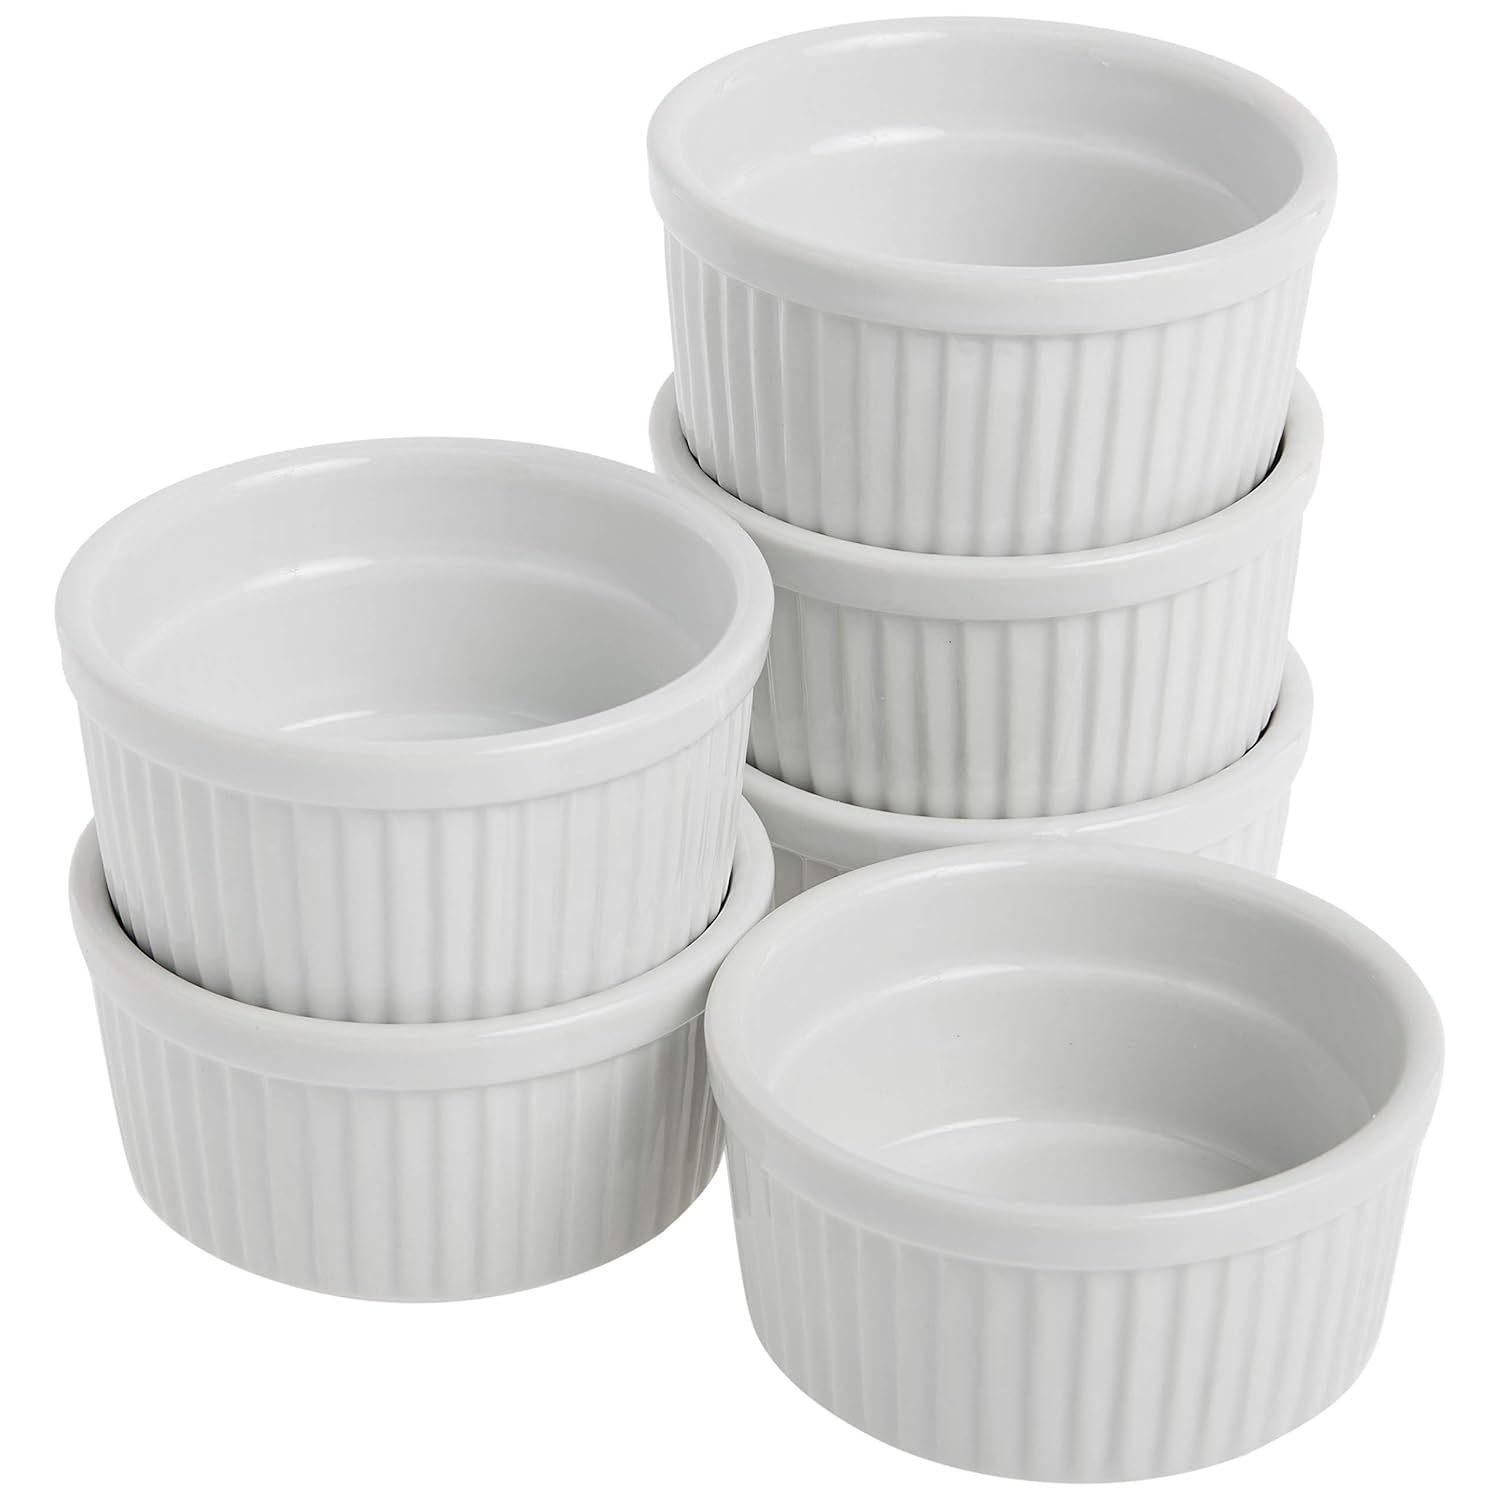 Primary image for Norpro 4oz/120ml Porcelain Ramekins, Set of 6